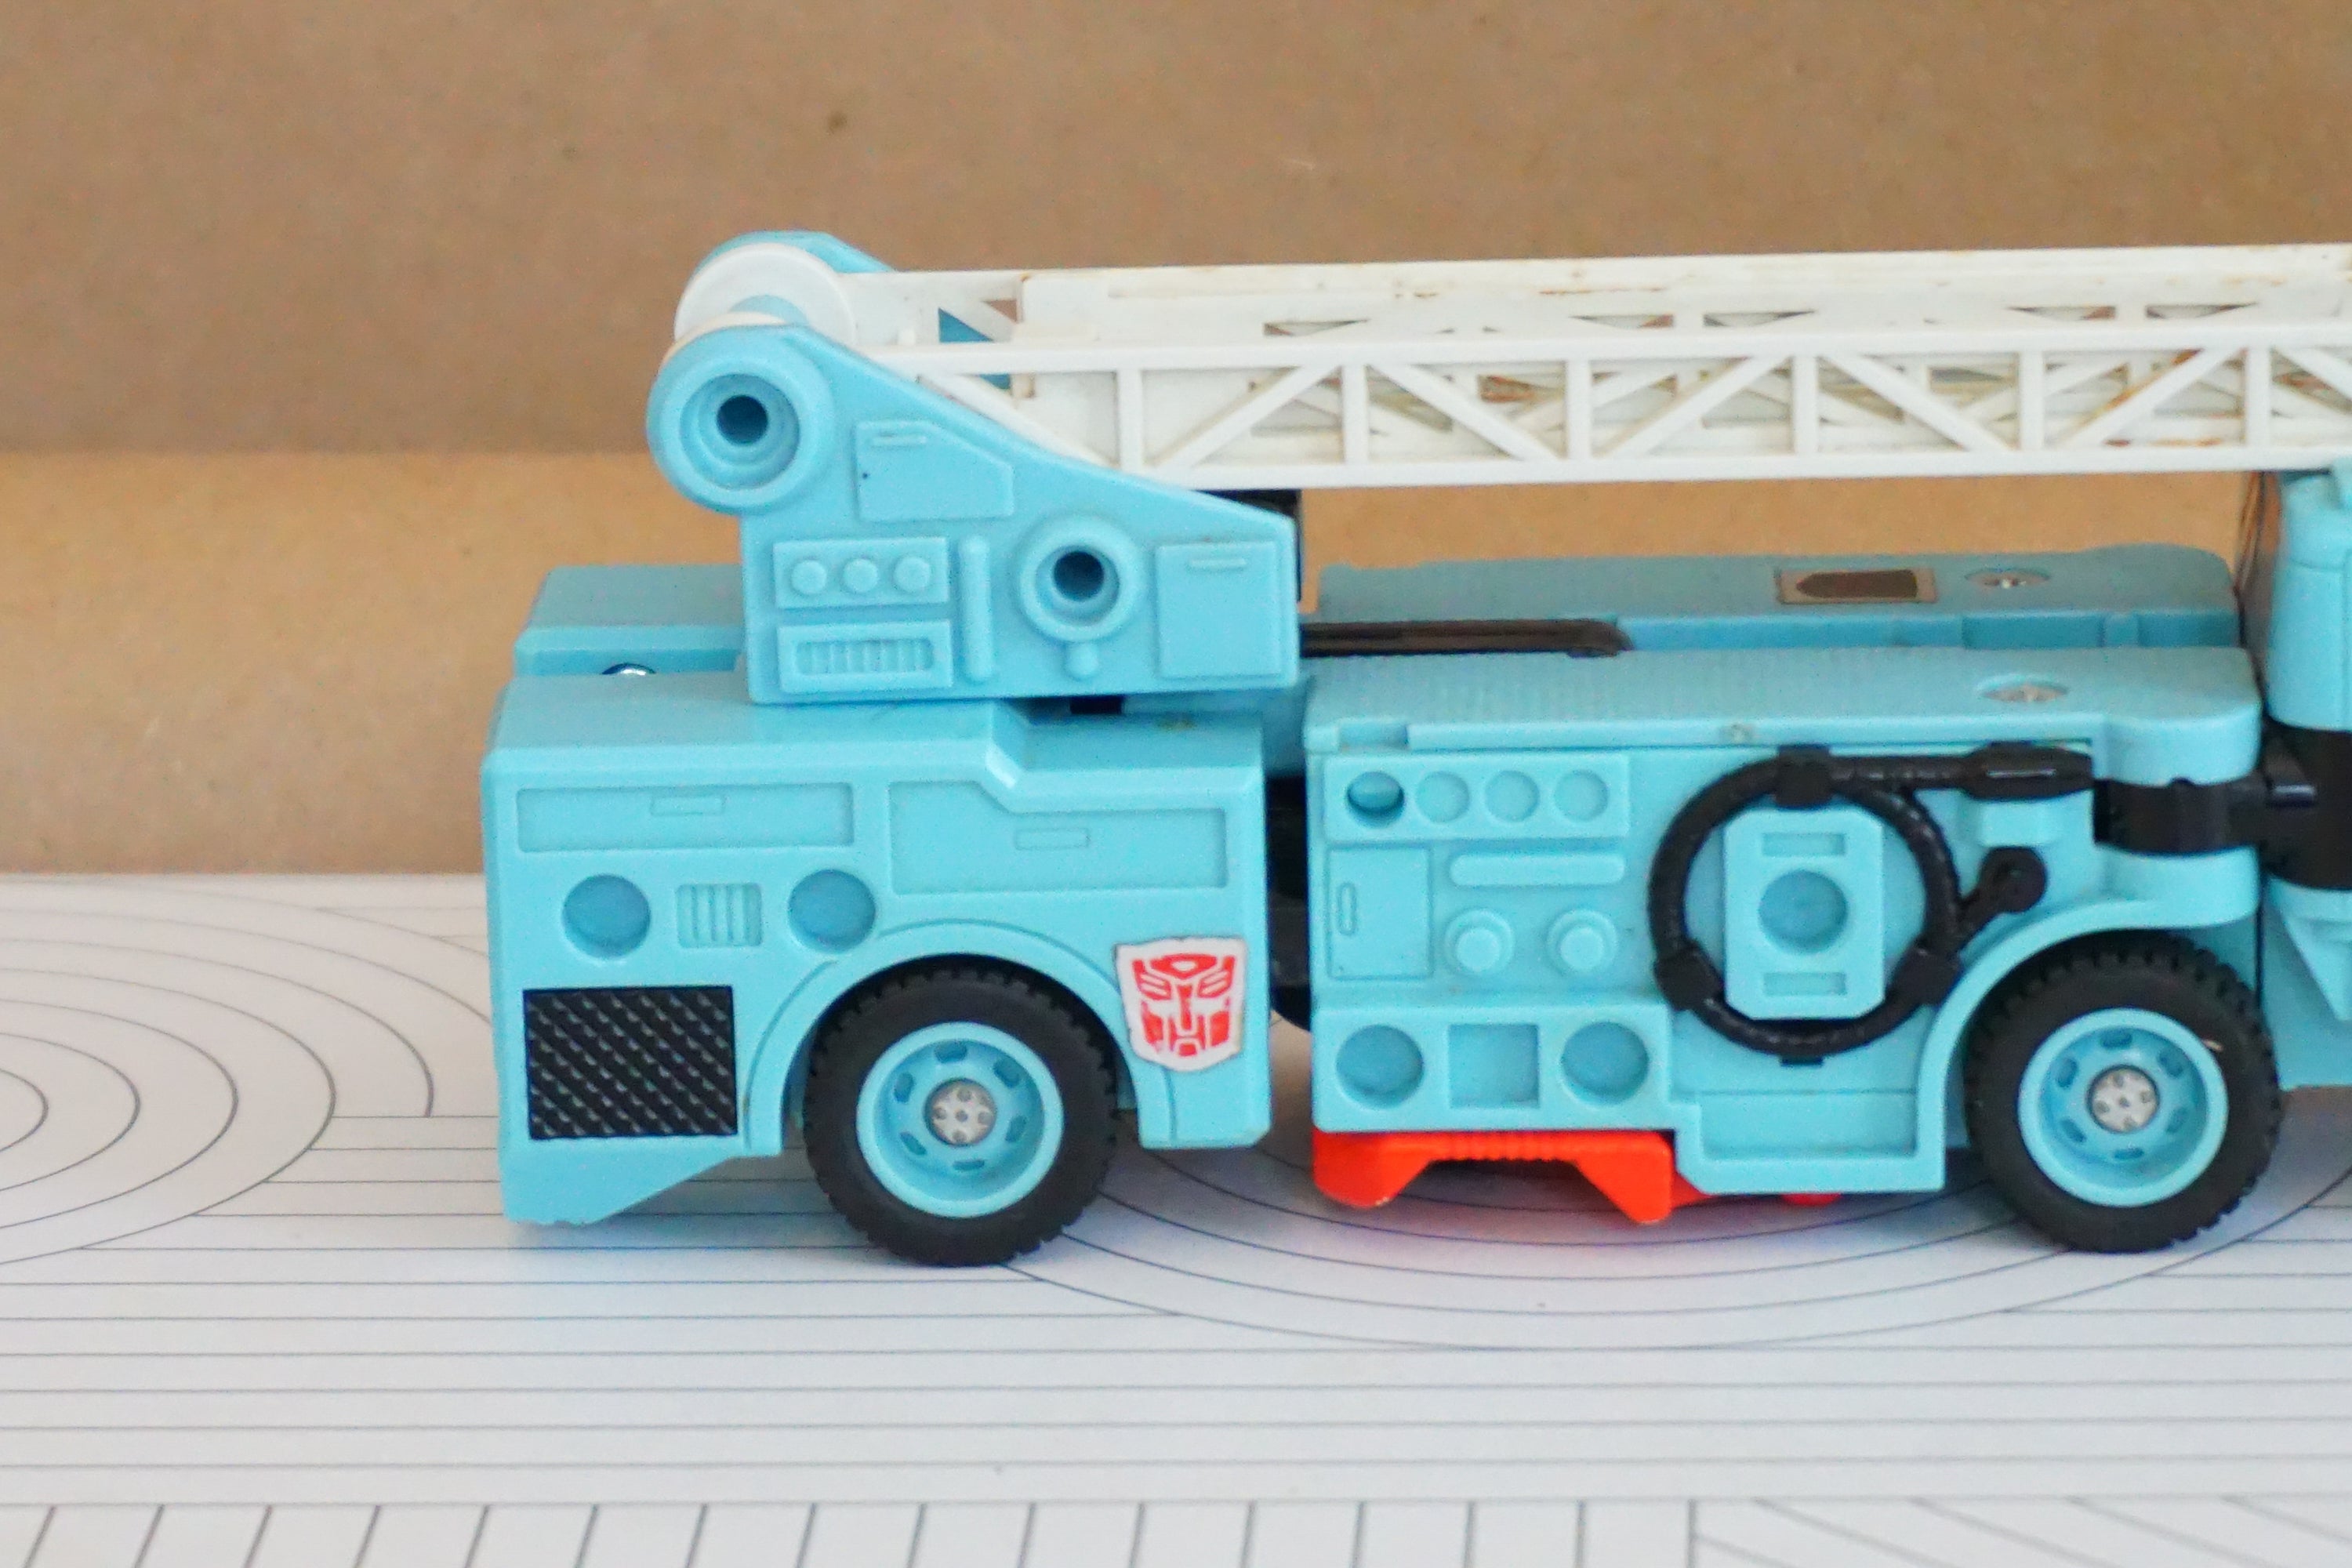 1986 Vintage HASBRO TAKARA Transformer G1 Protectobot (Defensor Combiner): Hotspot (P5) Blue Fire Truck Figure. Made in Japan.